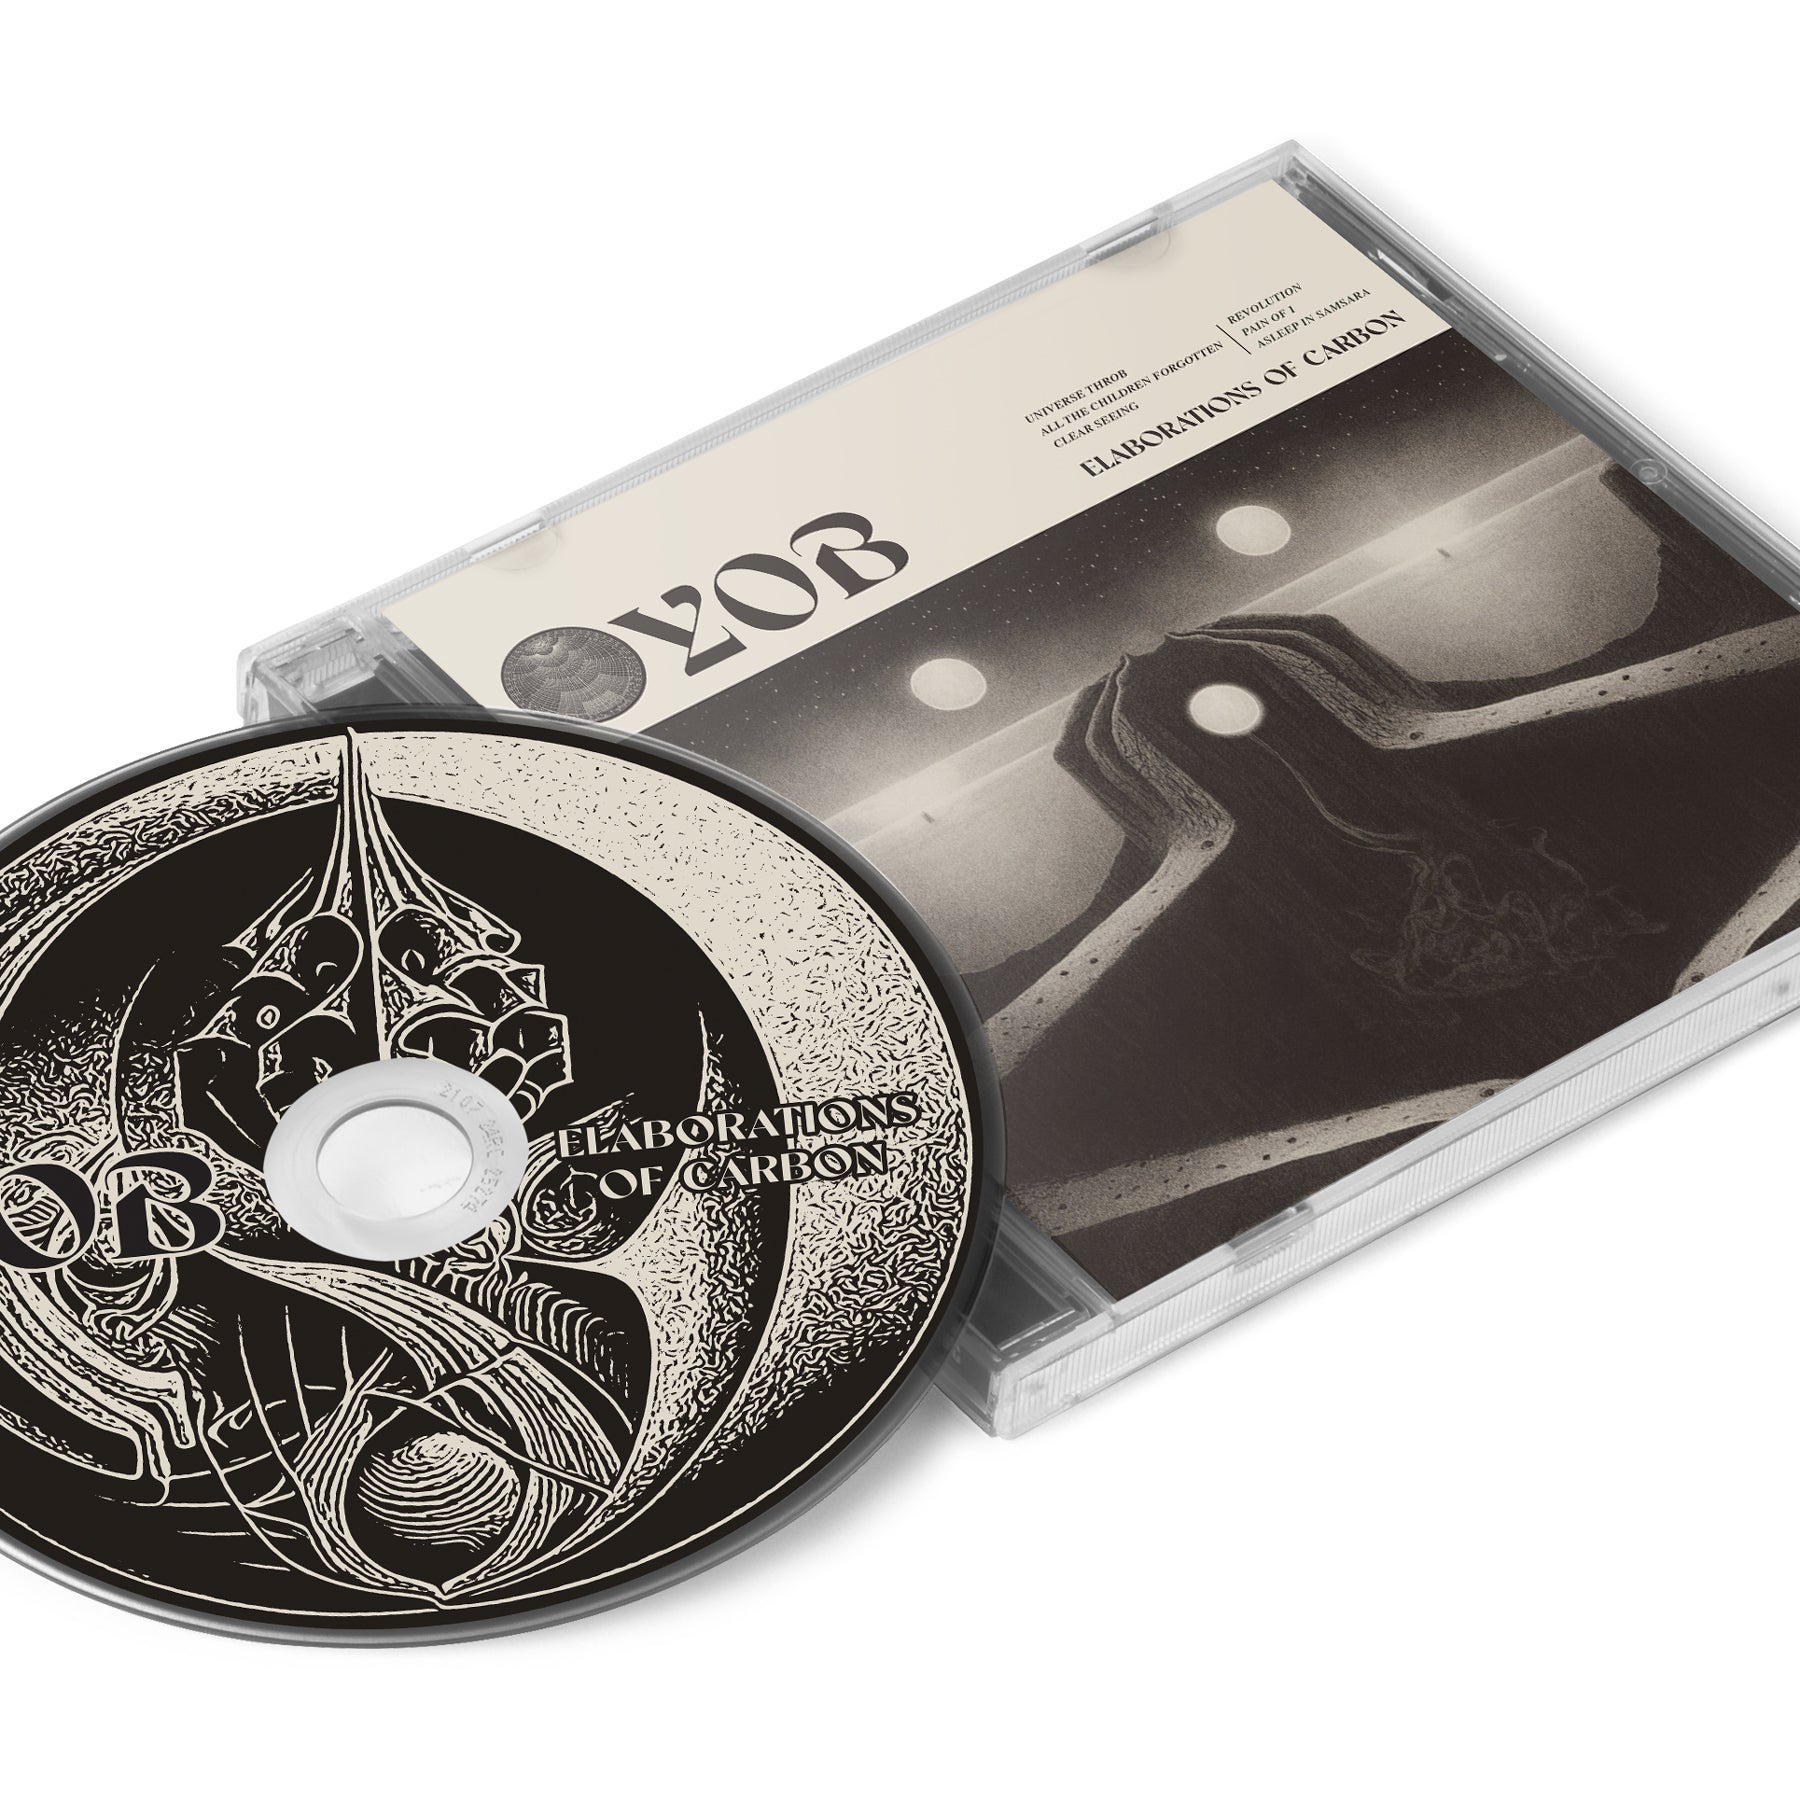 YOB "Elaborations of Carbon (Reissue)" CD